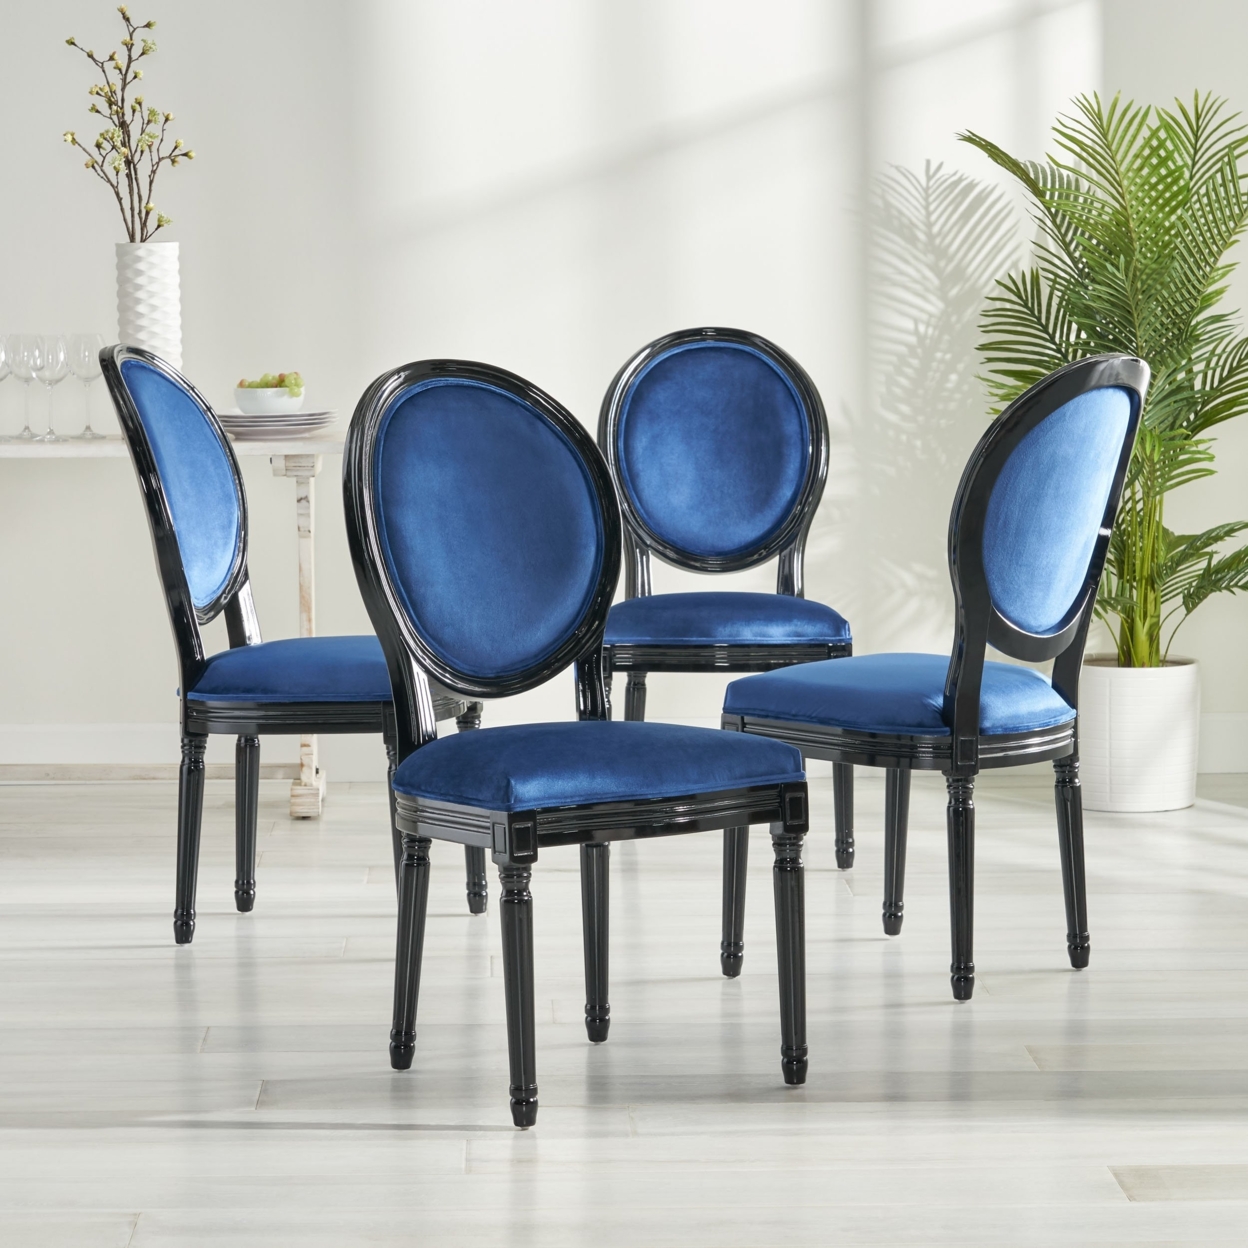 Lariya French Country Dining Chairs (Set Of 4) - Navy Blue/gloss Black